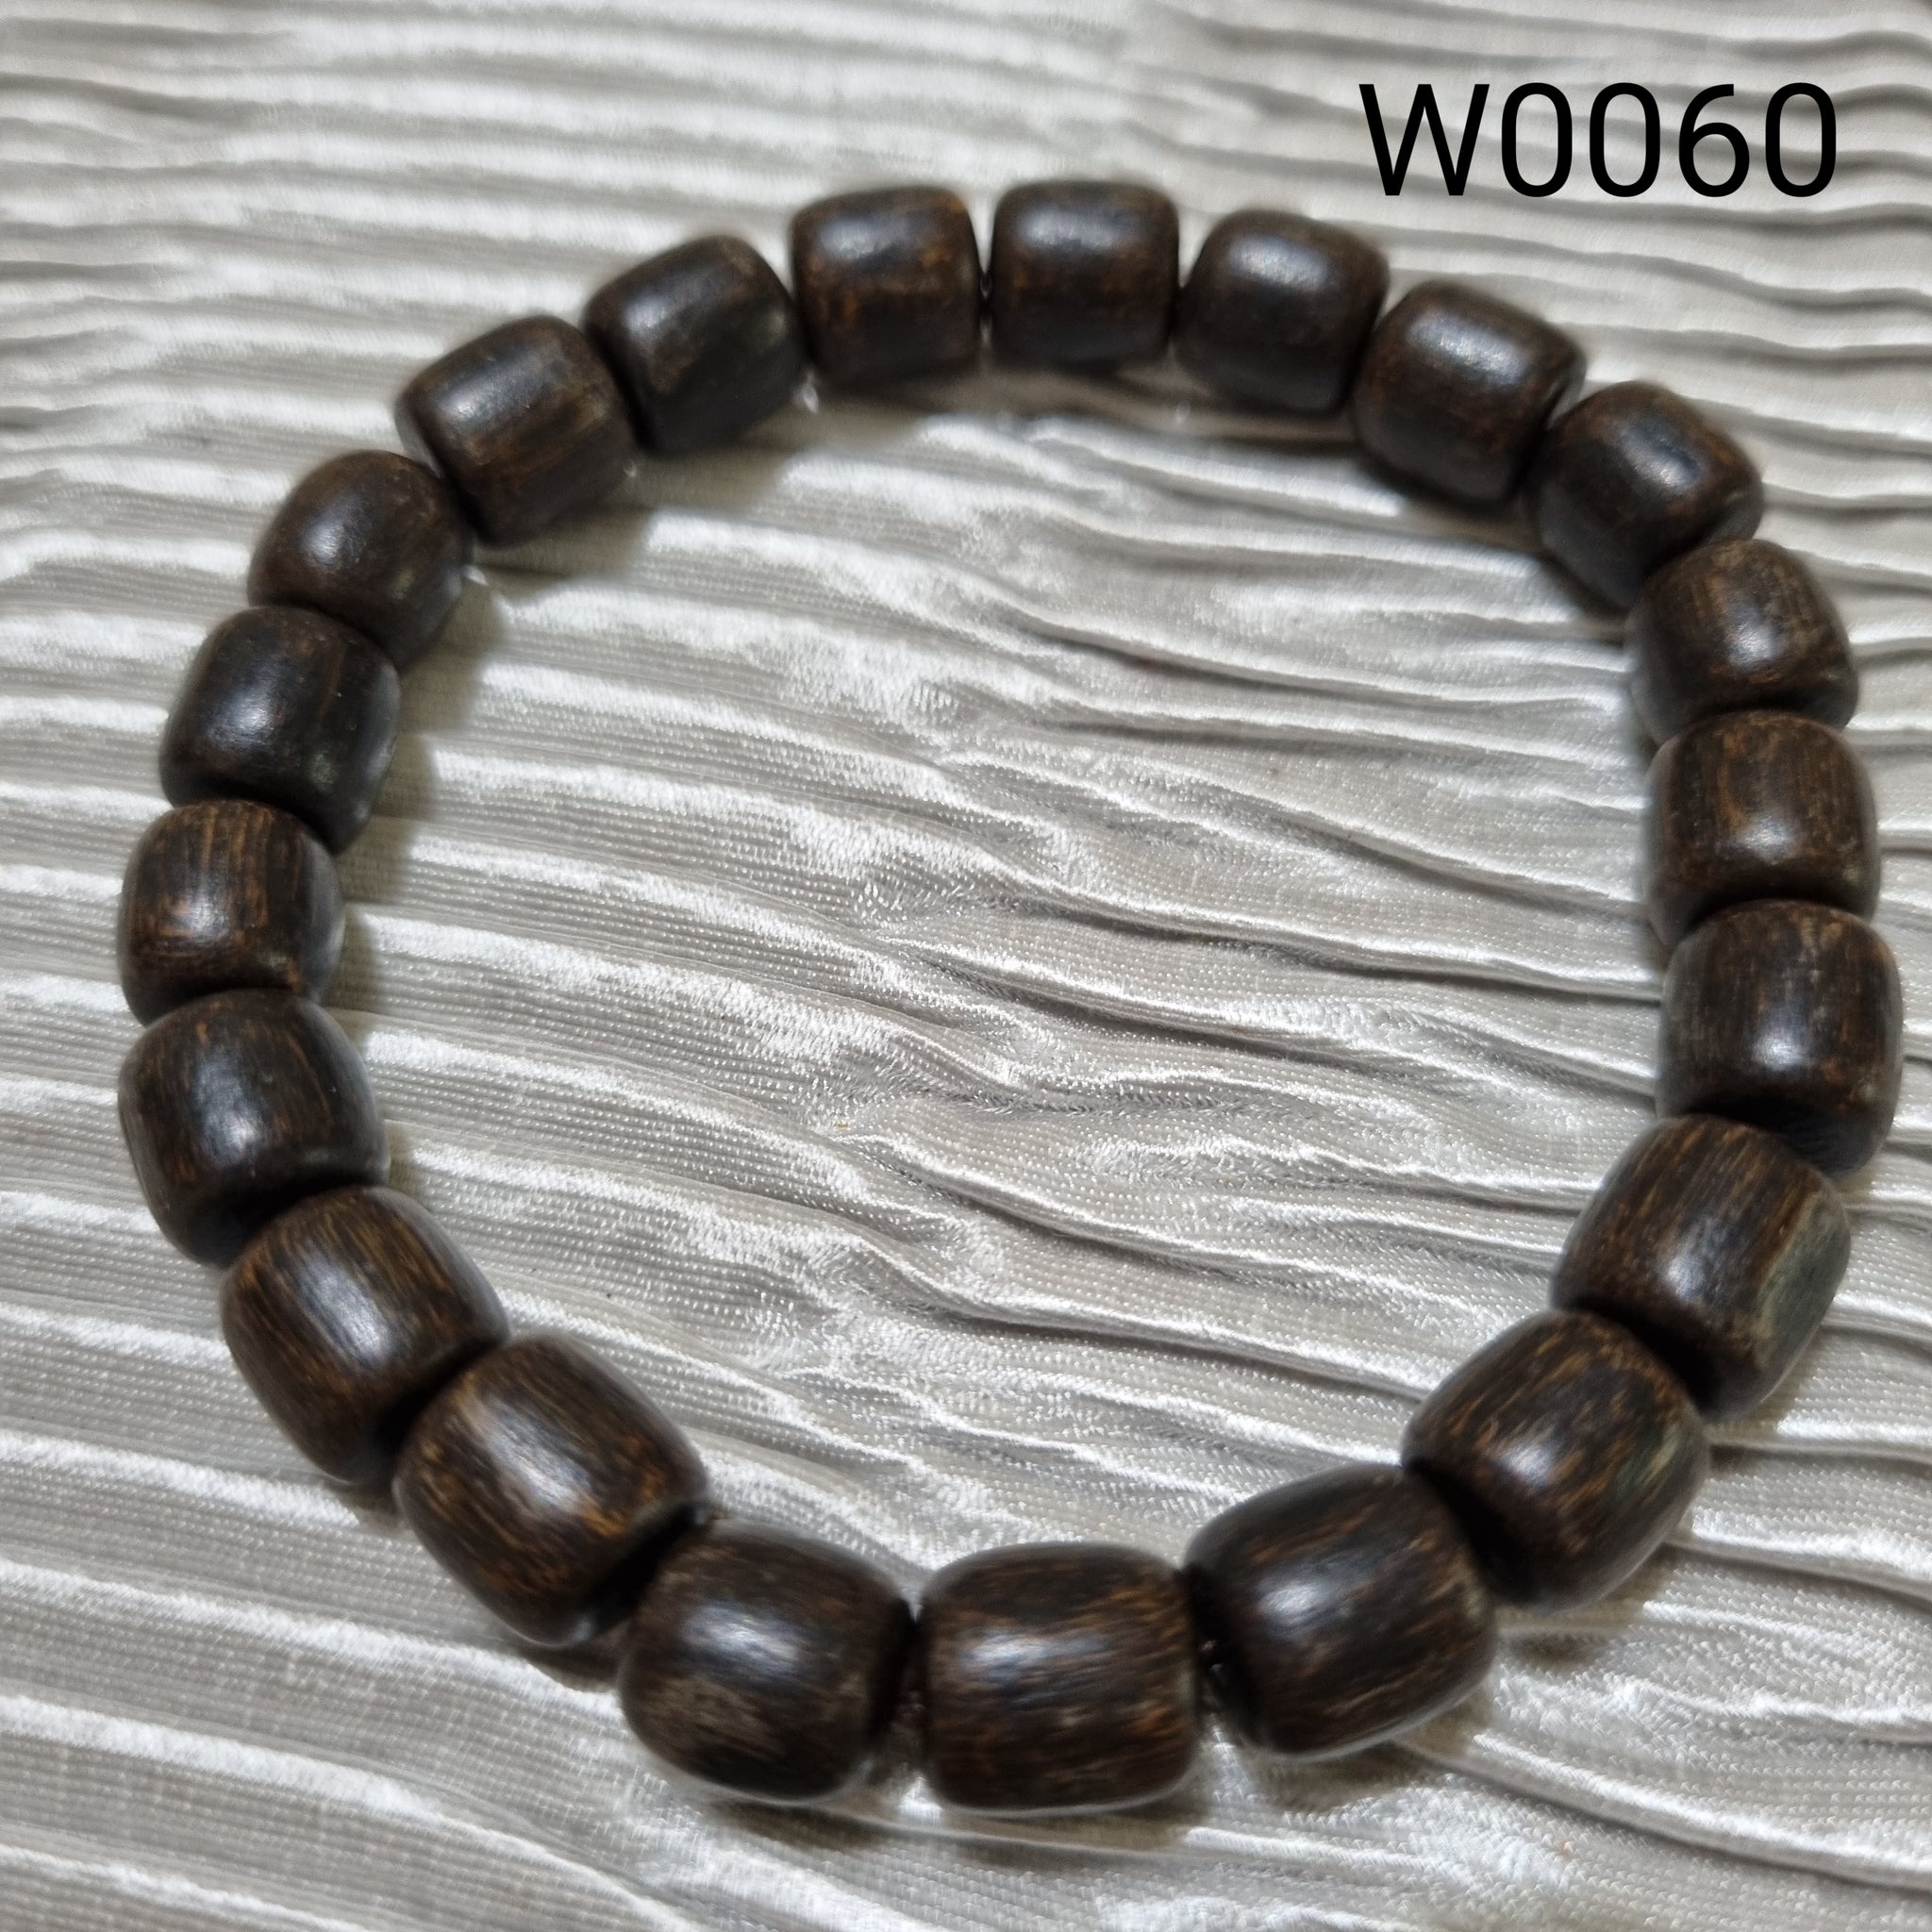 W0060 - CLEARANCE Ebony Beads Bracelet (黑檀木)